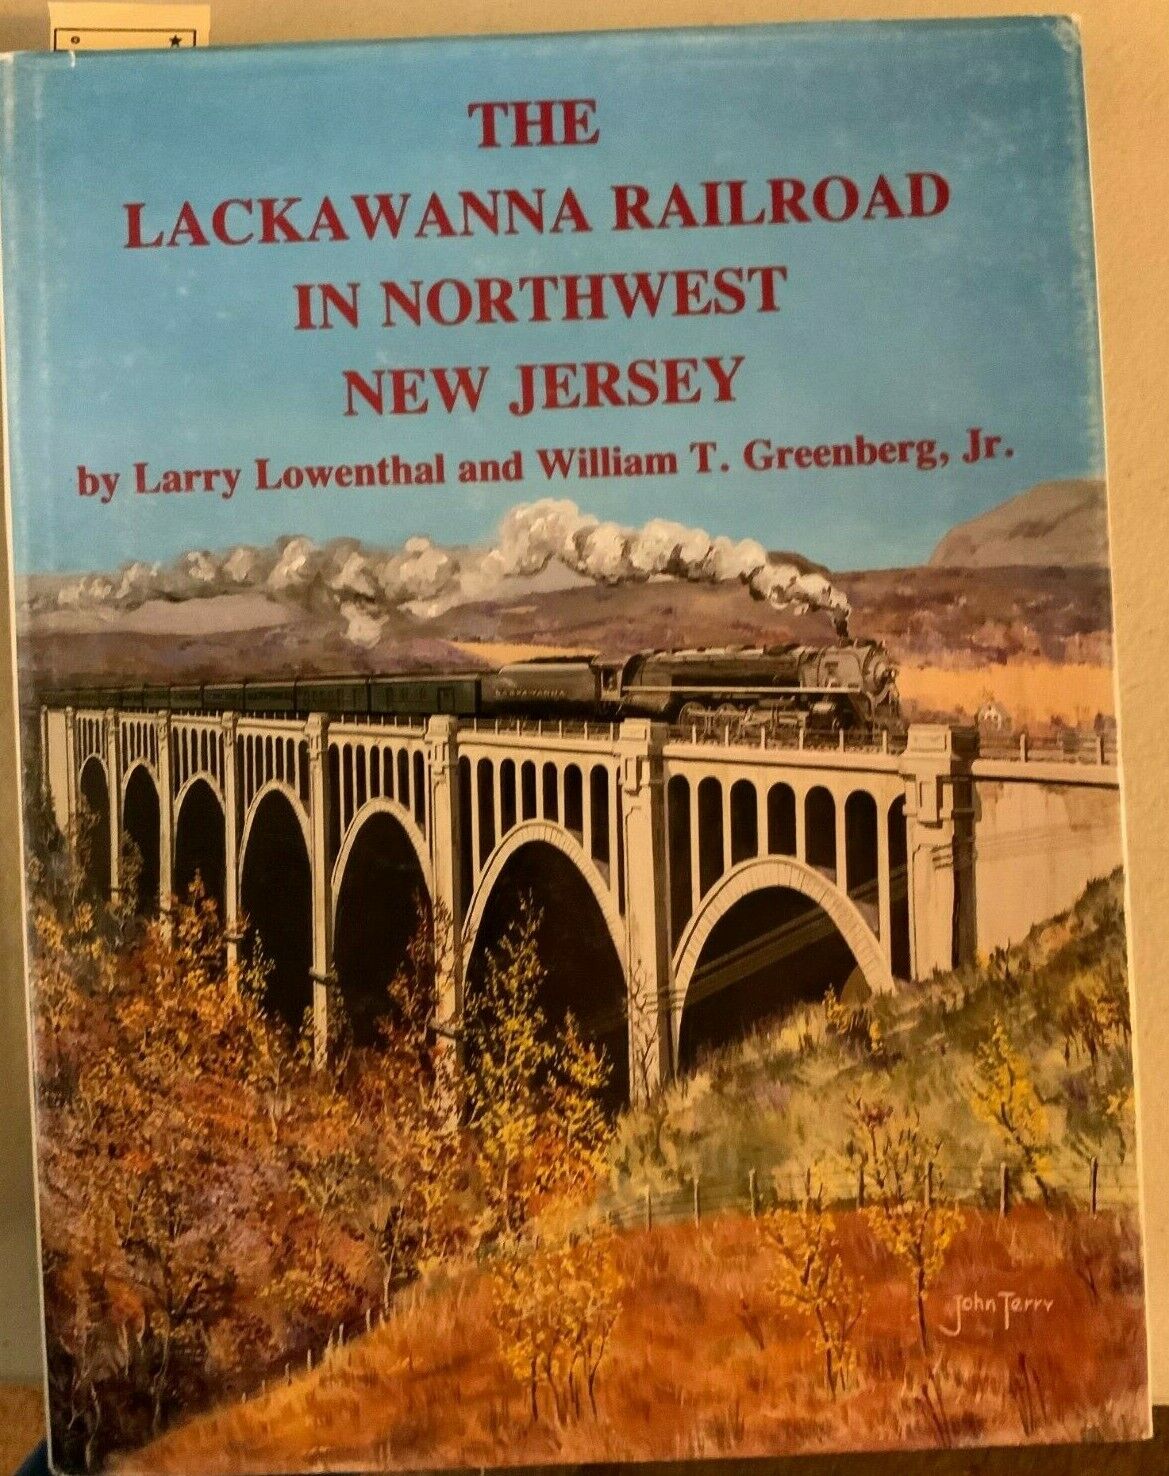 The Lackawanna Railroad in Northwest New Jersey